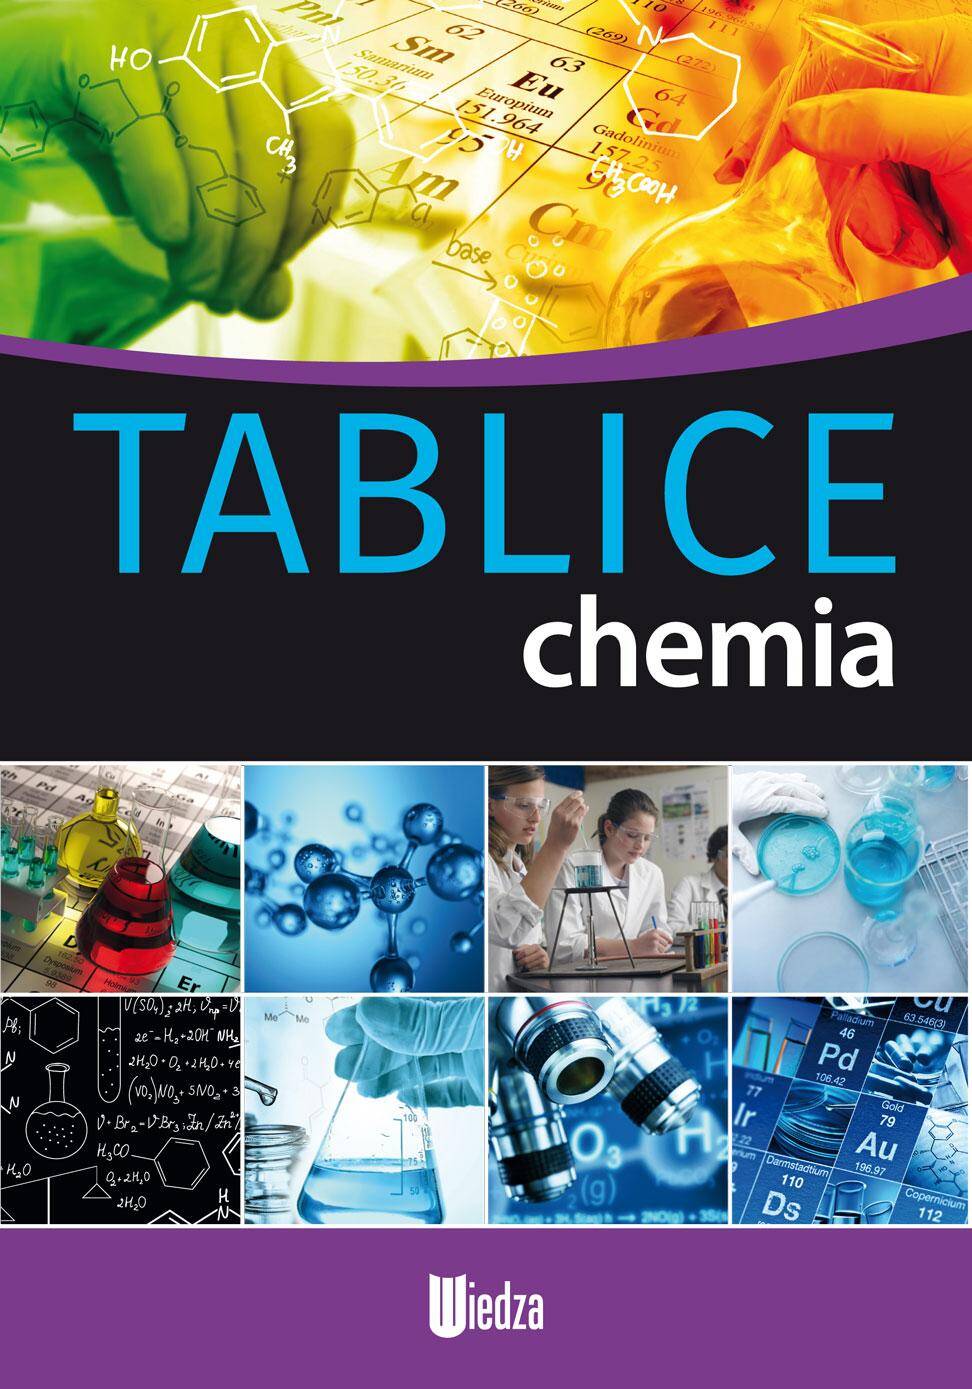 Chemia tablice